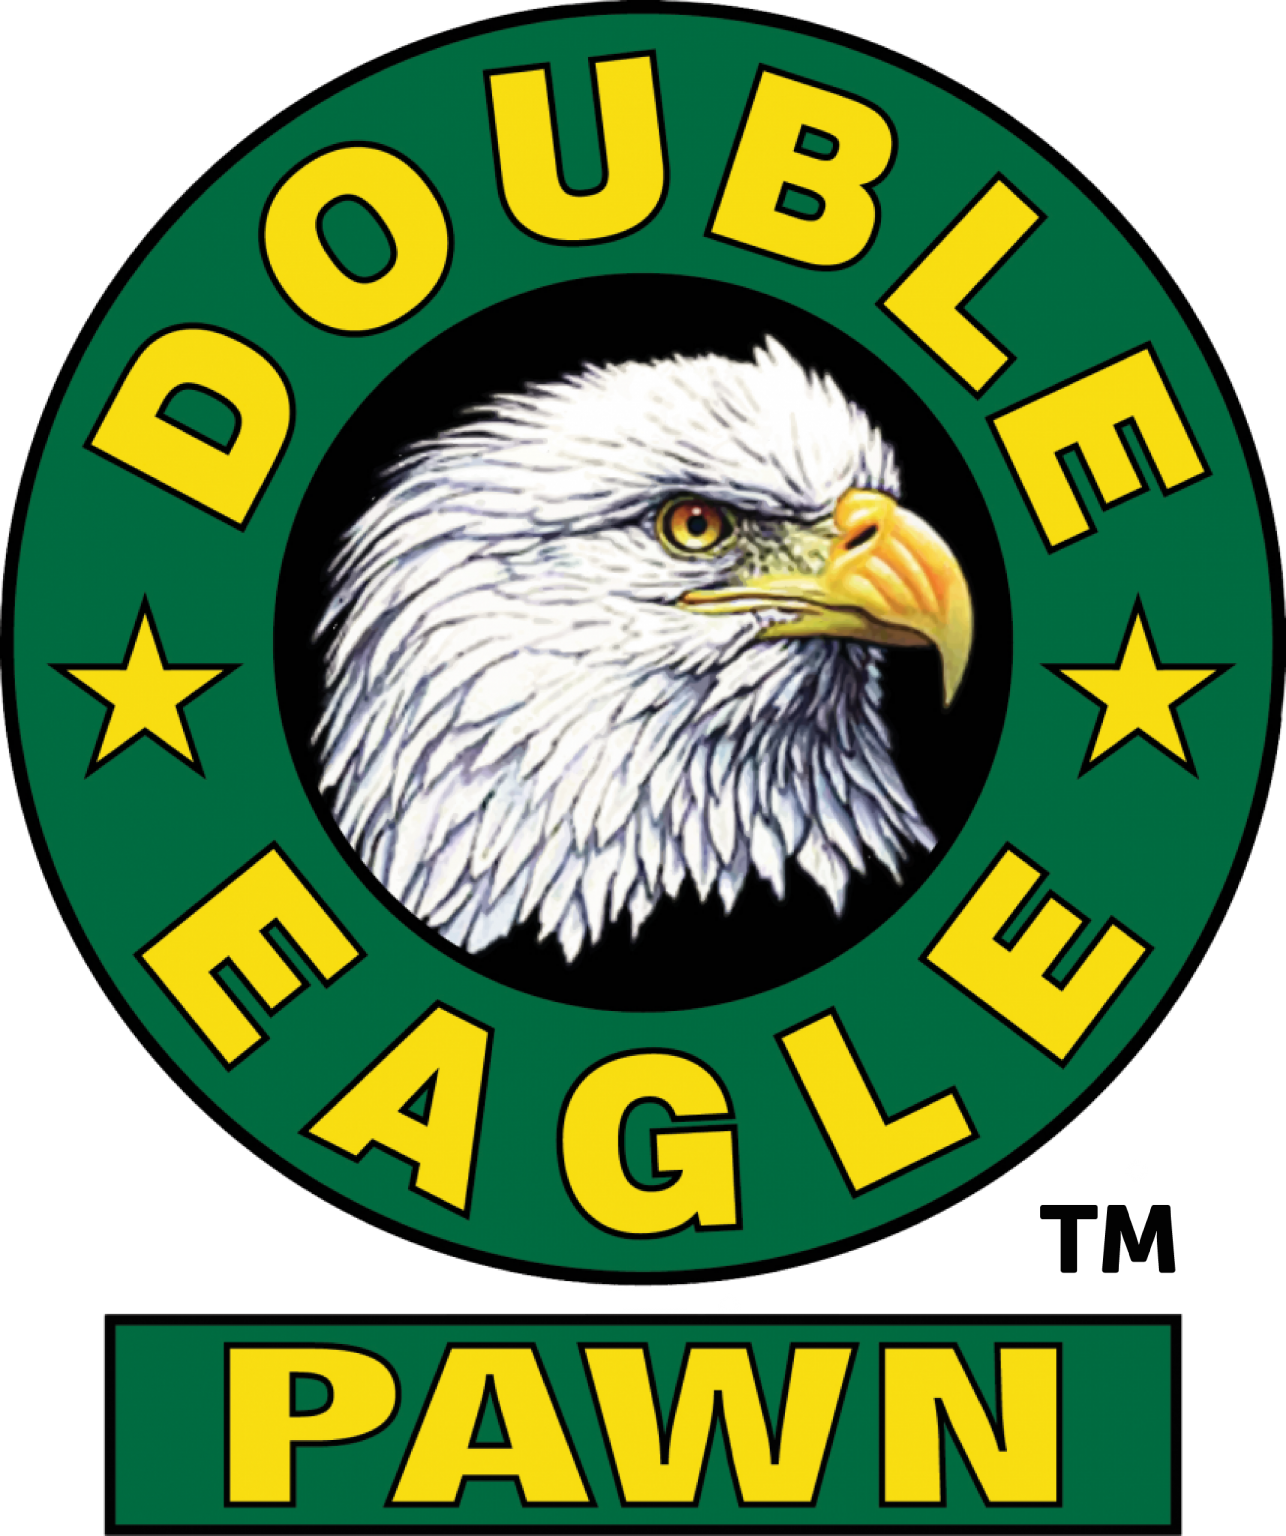 FAQ Double Eagle Pawn